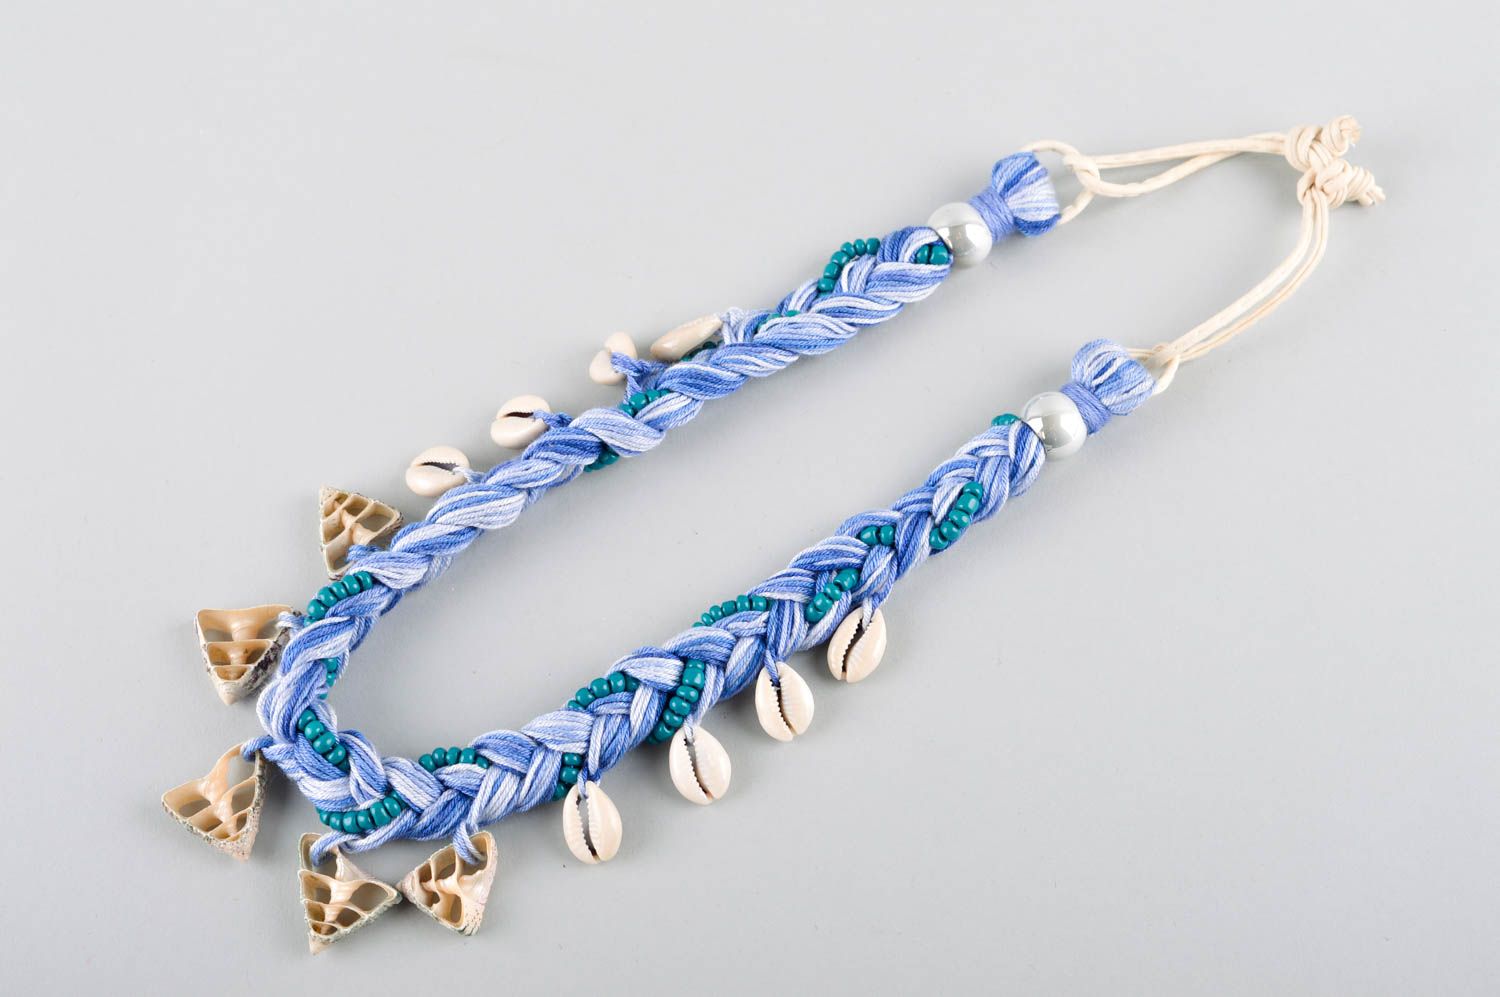 Handmade textile necklace beautiful jewellery ideas artisan jewelry designs photo 5